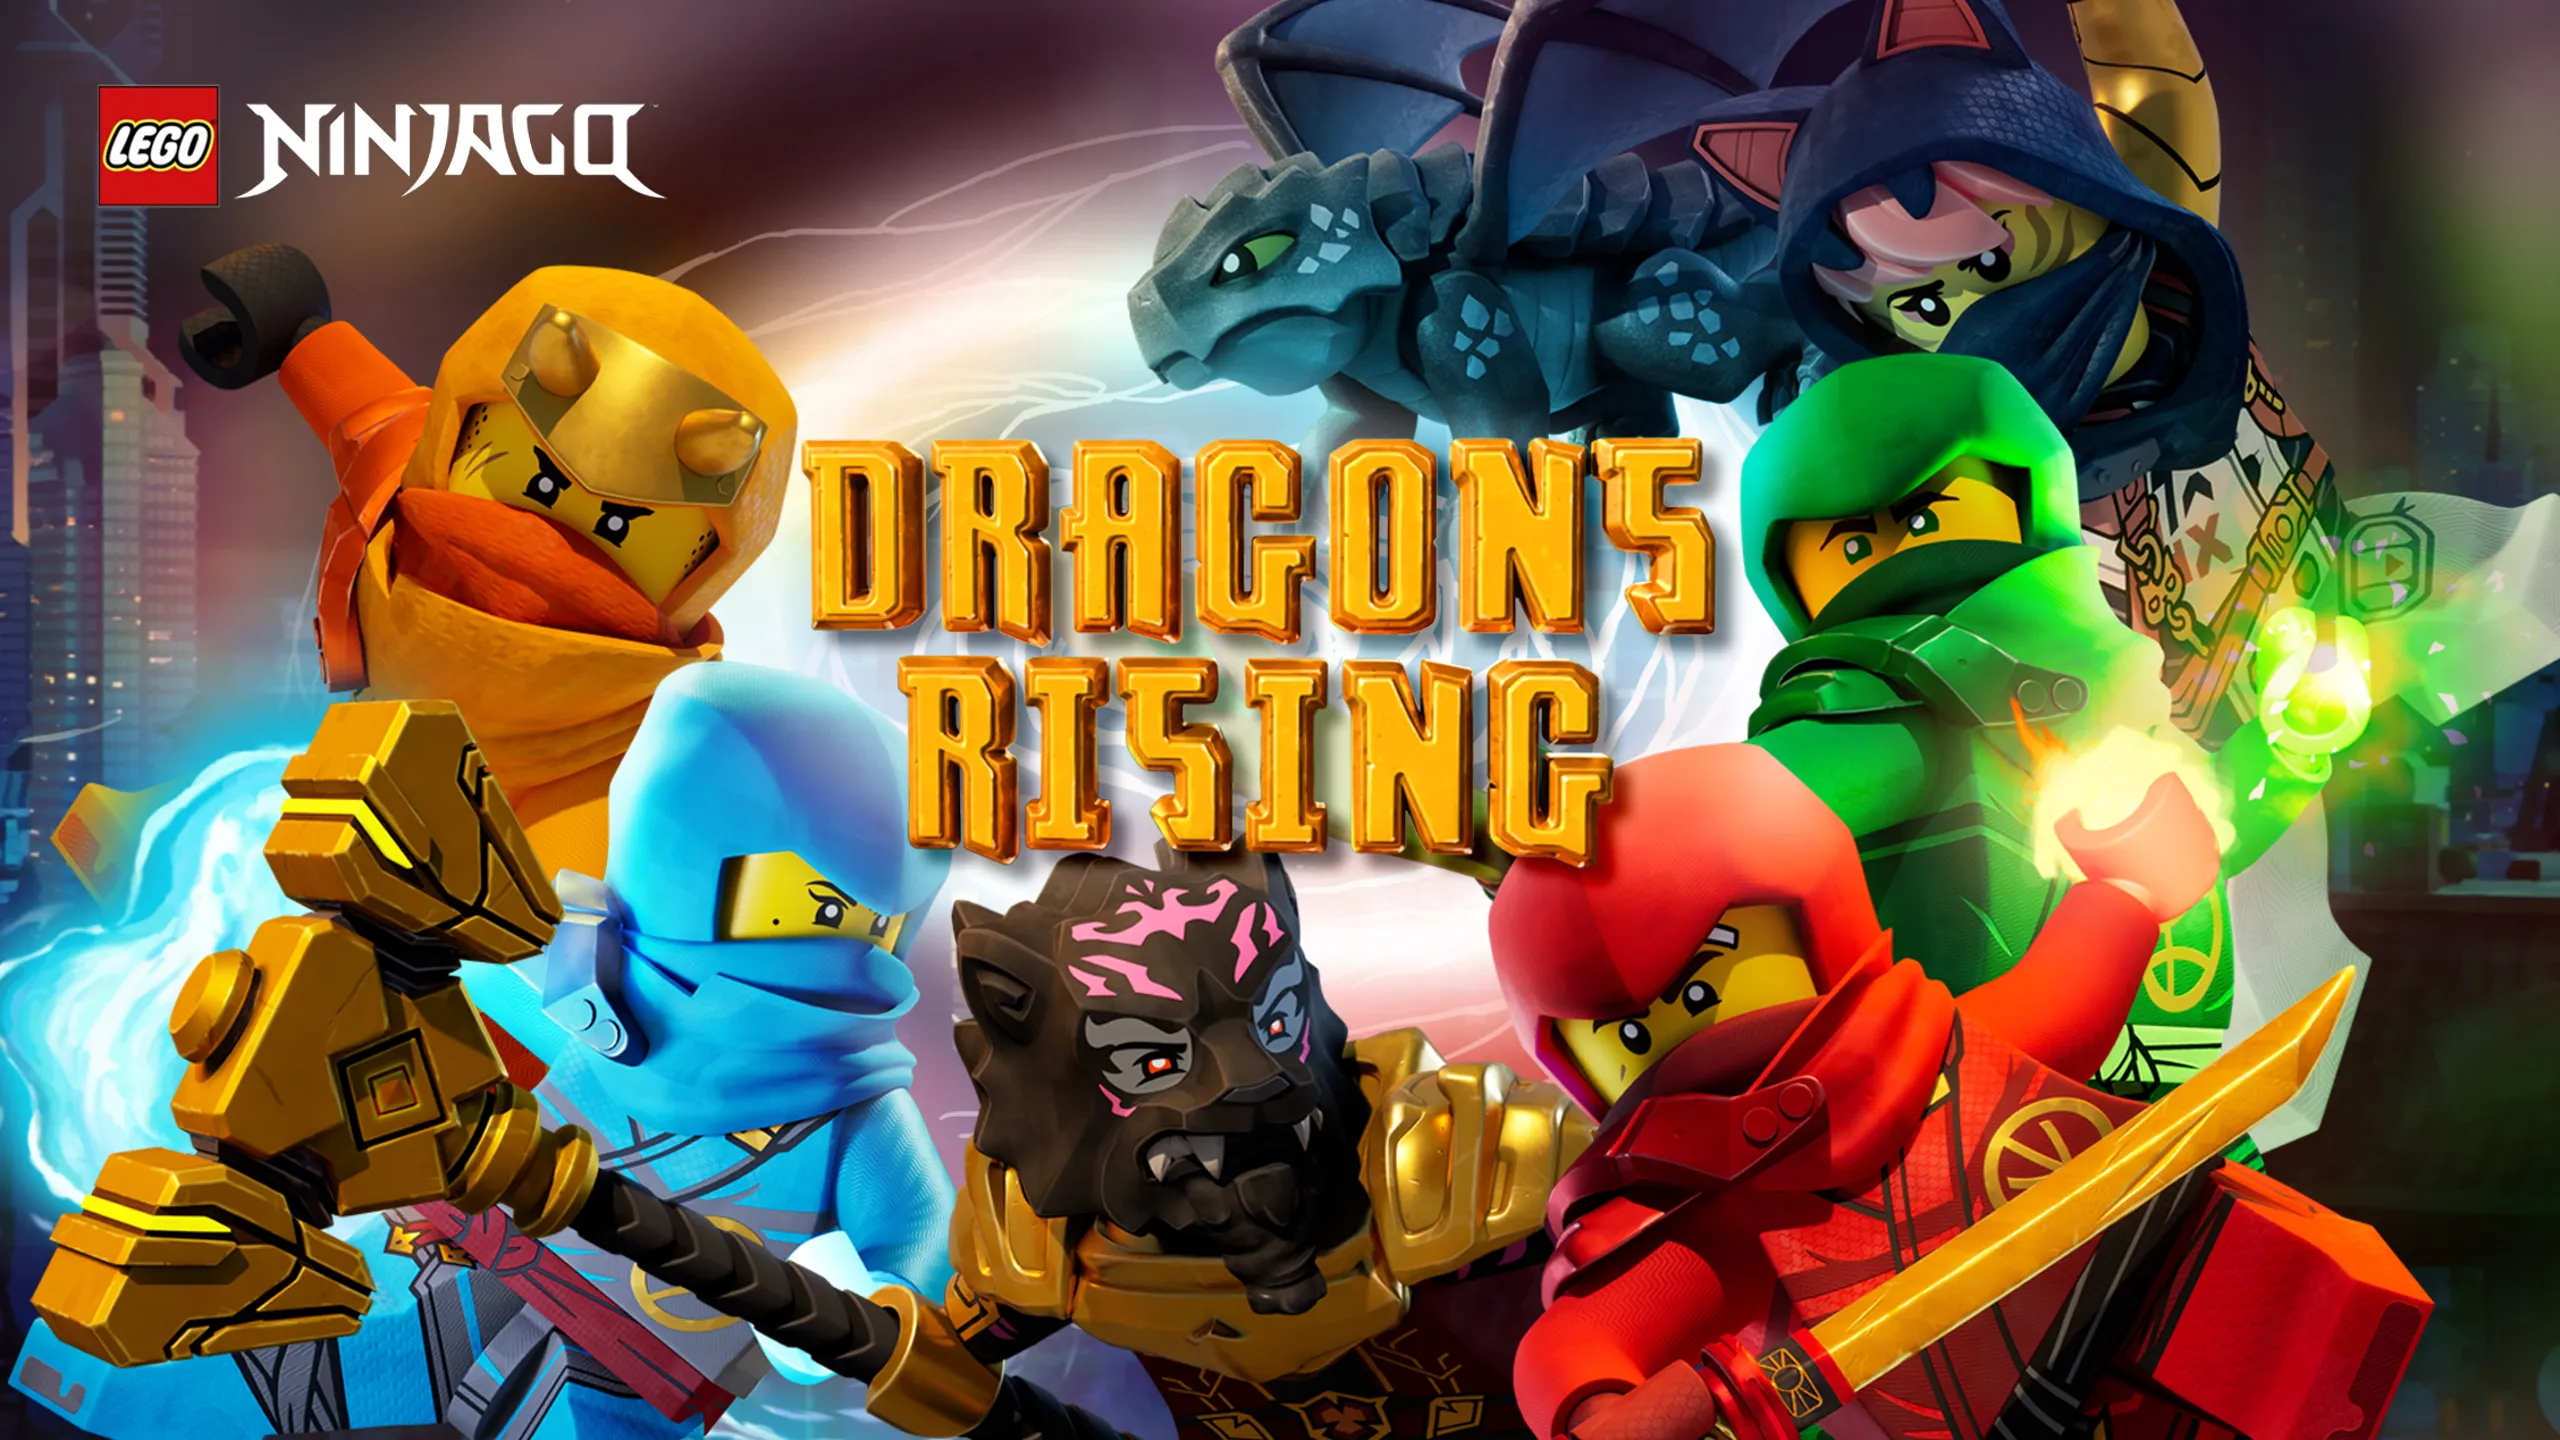 NINJAGO®: Dragons Rising